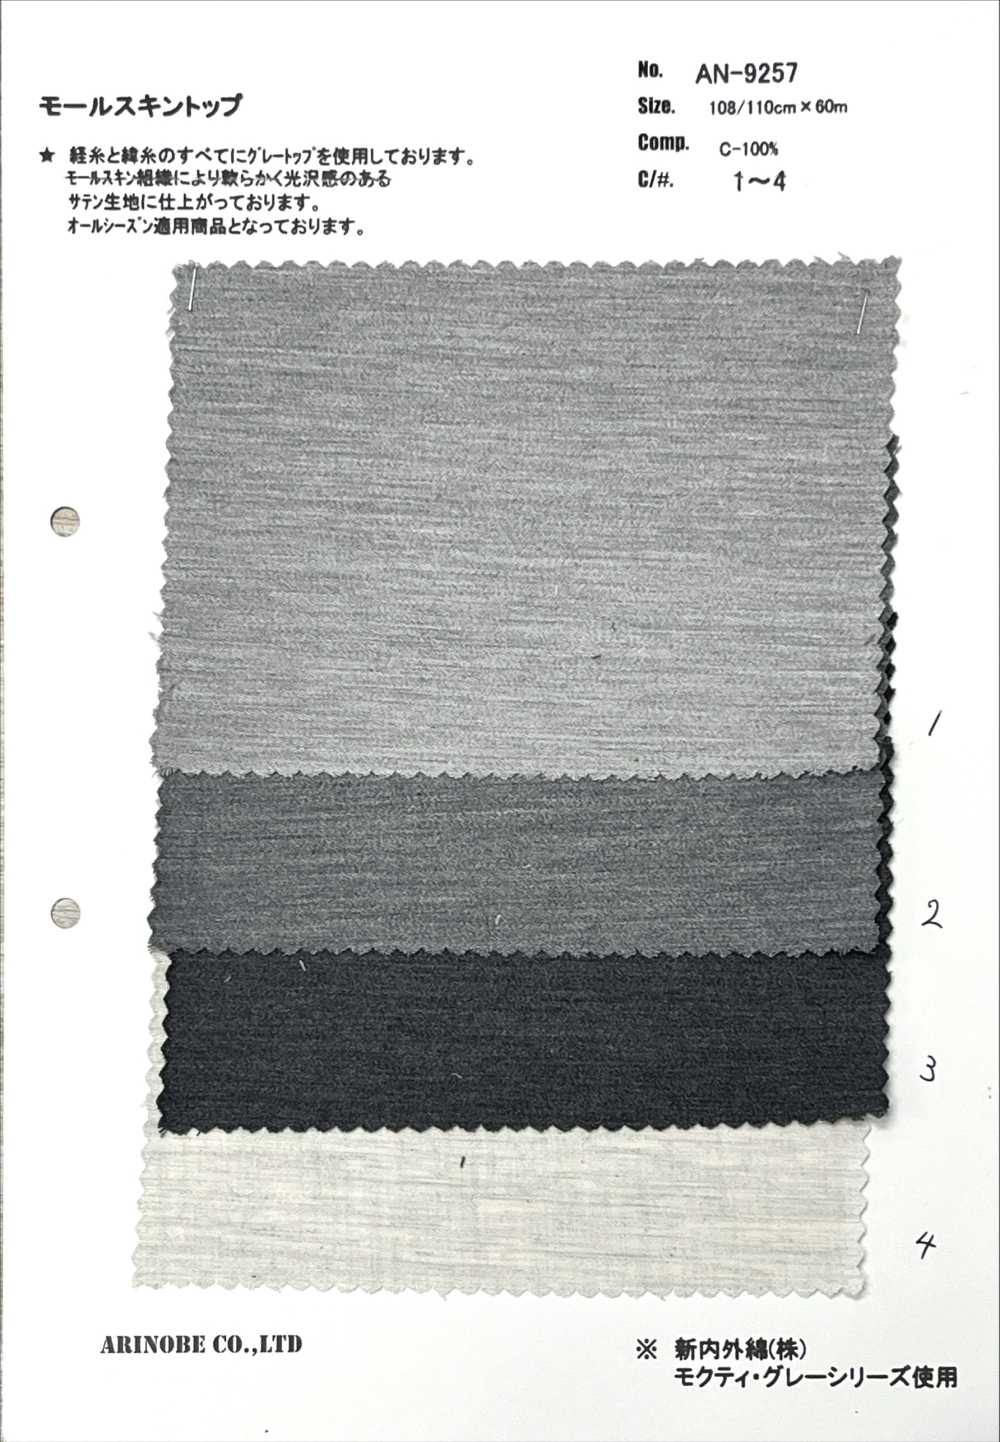 AN-9257 Moleskin Top Thread Used[Textile / Fabric] ARINOBE CO., LTD.